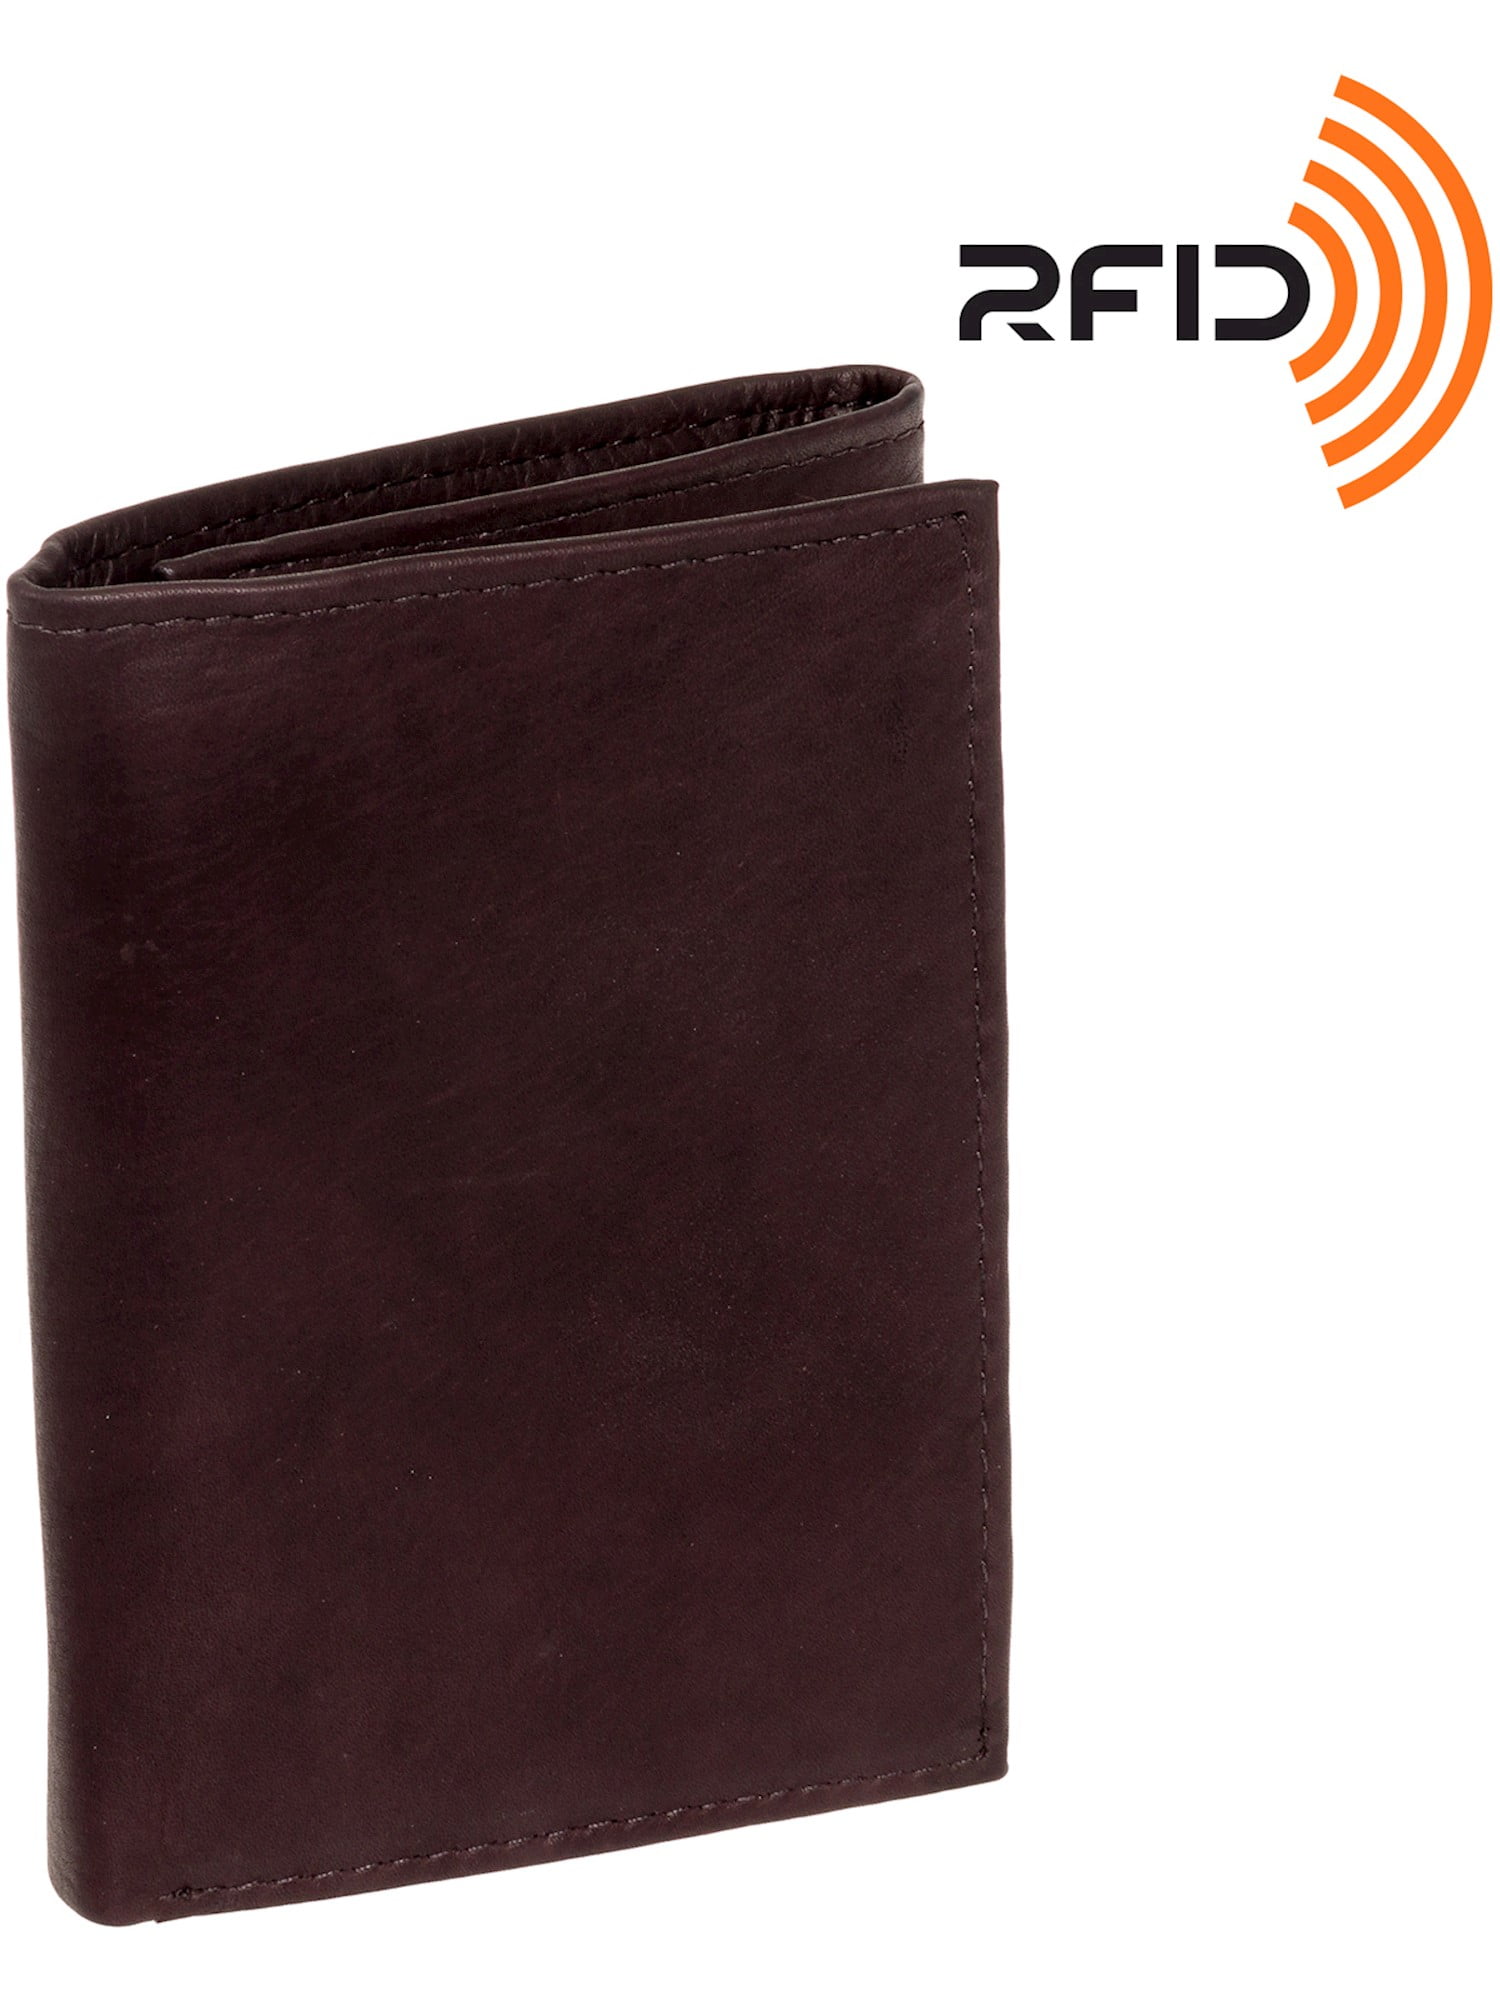 Prime Hide Sanford Men's Small Black Trifold Leather Wallet RFID Blocking New 